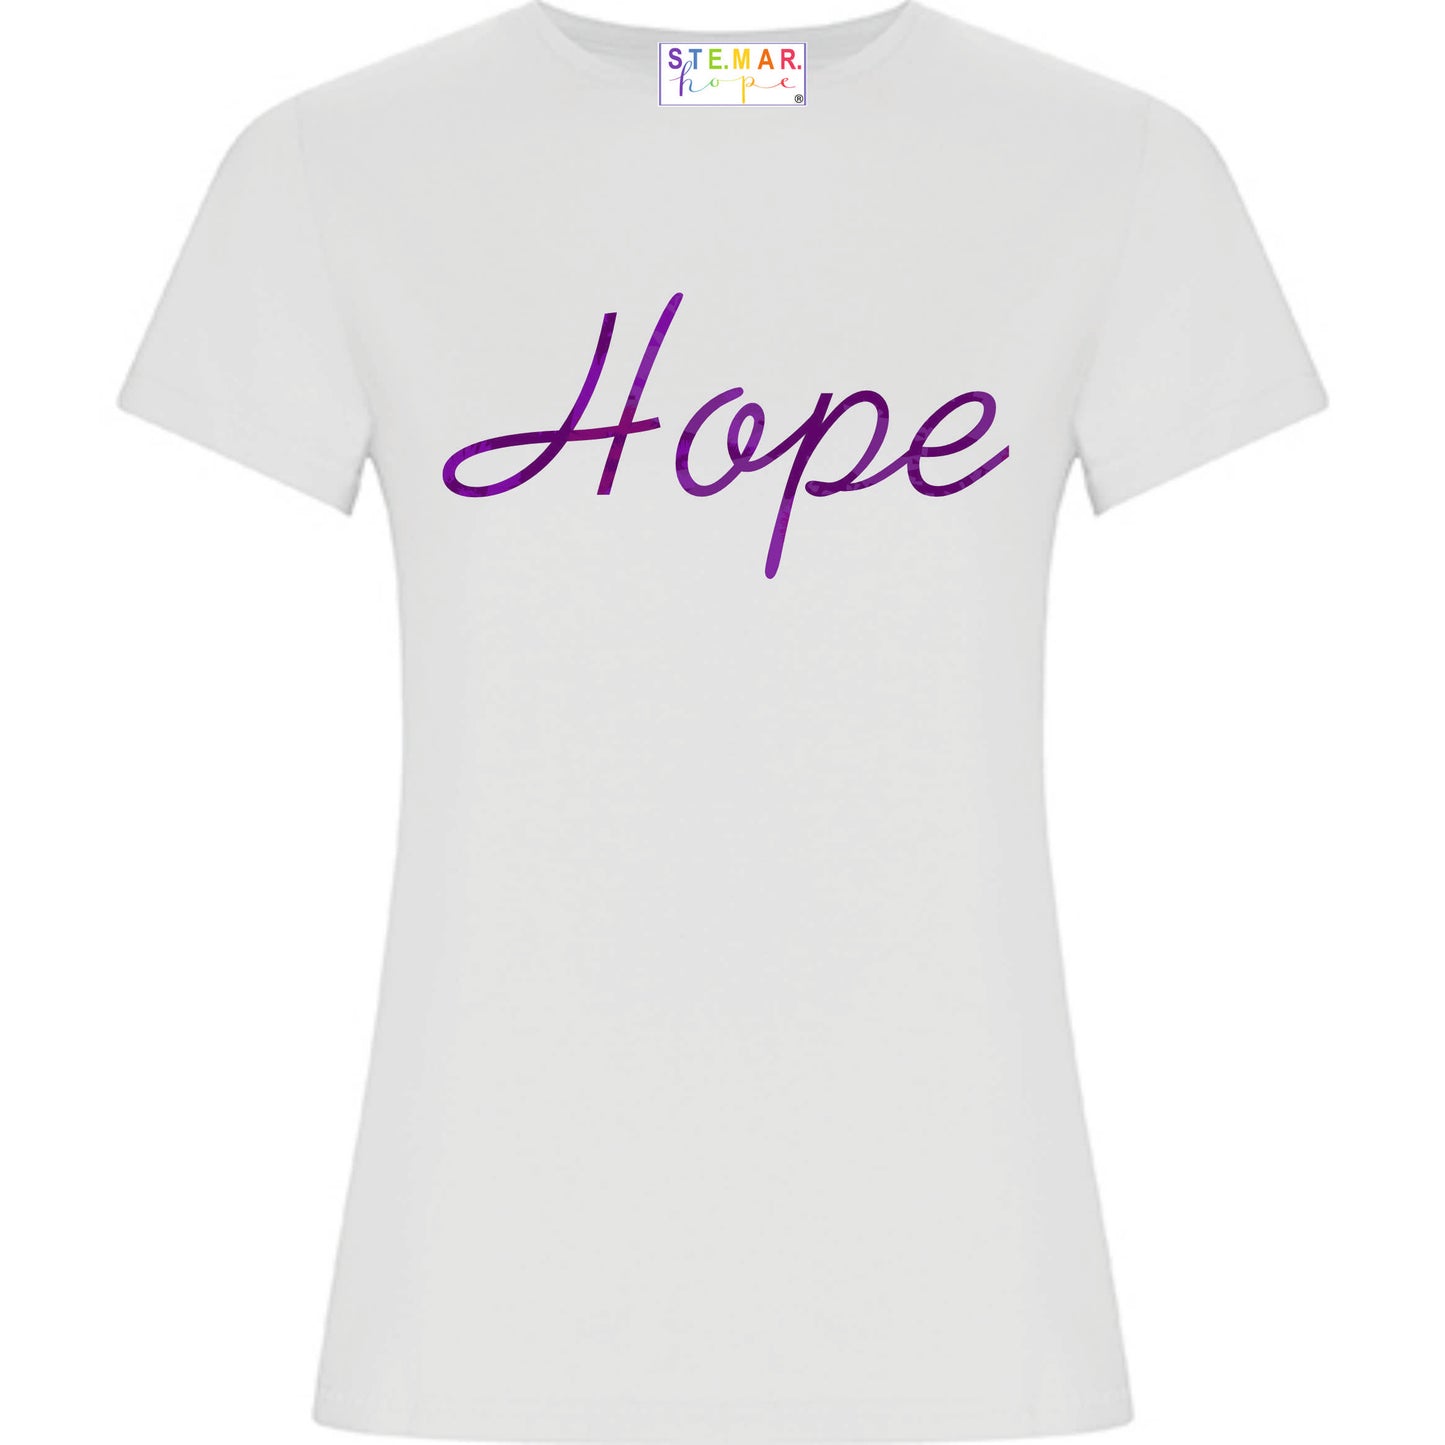 T-shirt baby Golden in cotone stampa "hope" viola sfumato